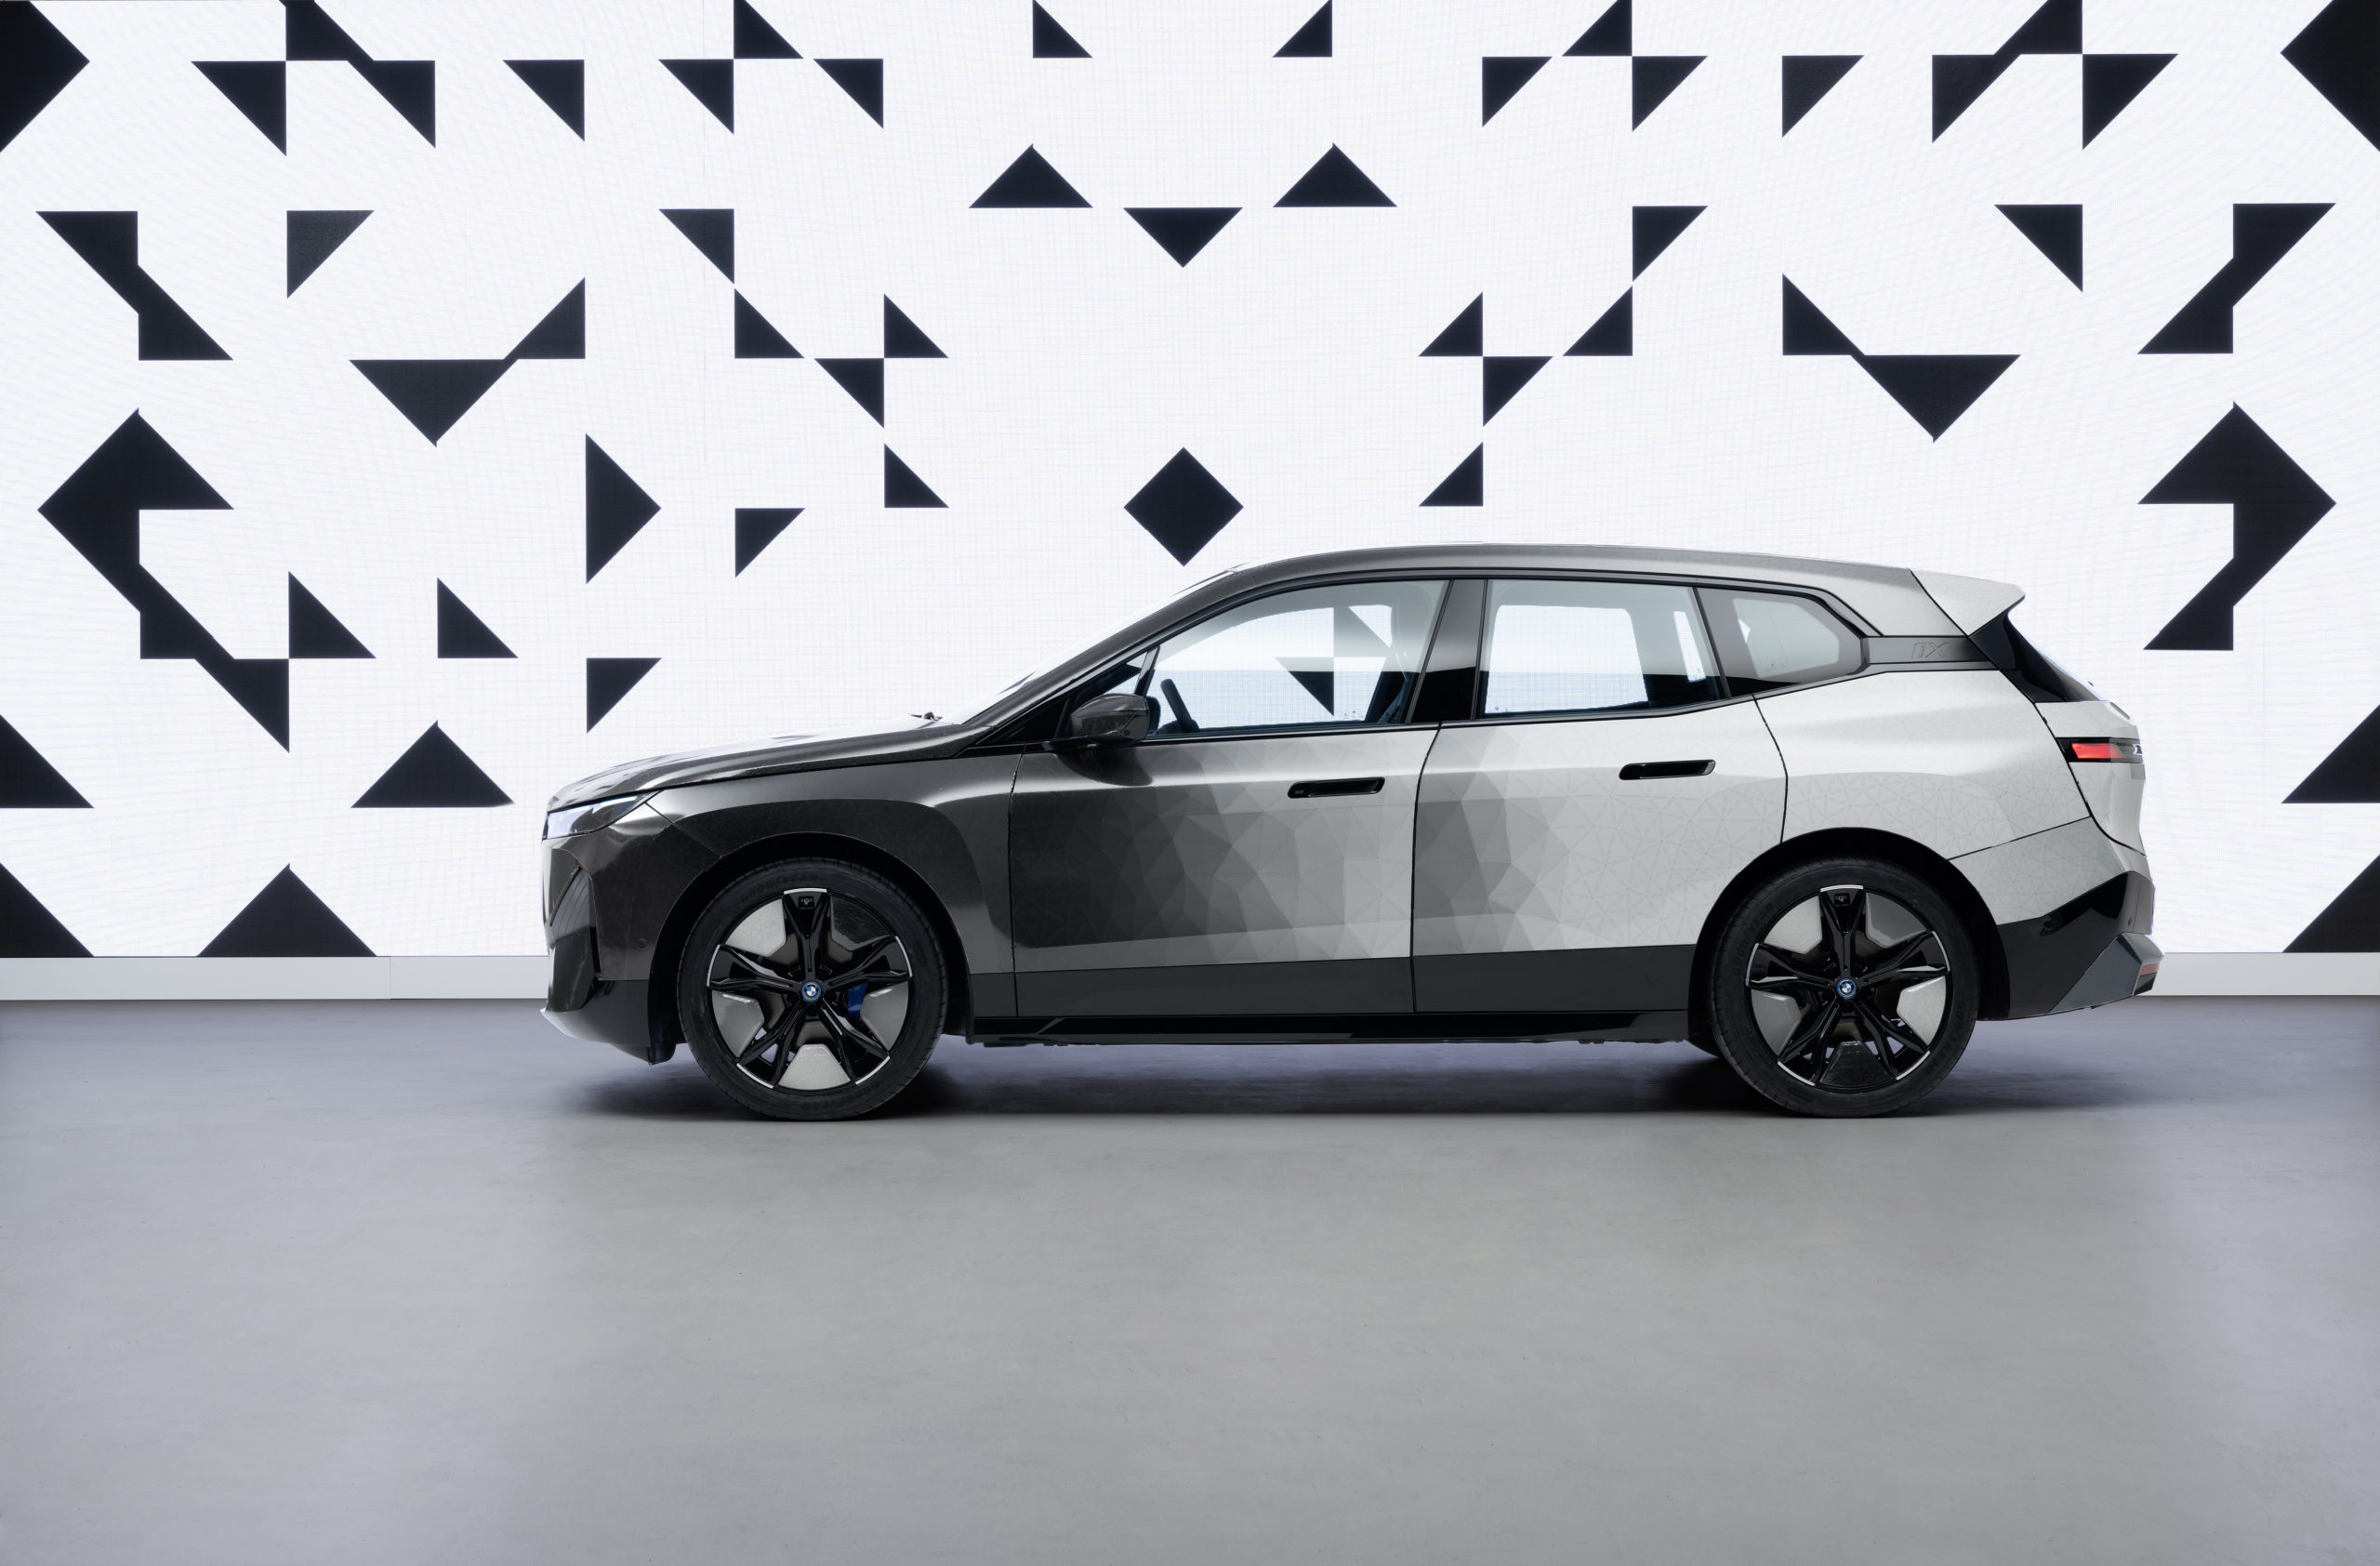 BMW Concept Car Features Changing Surface Color | THE SHOP